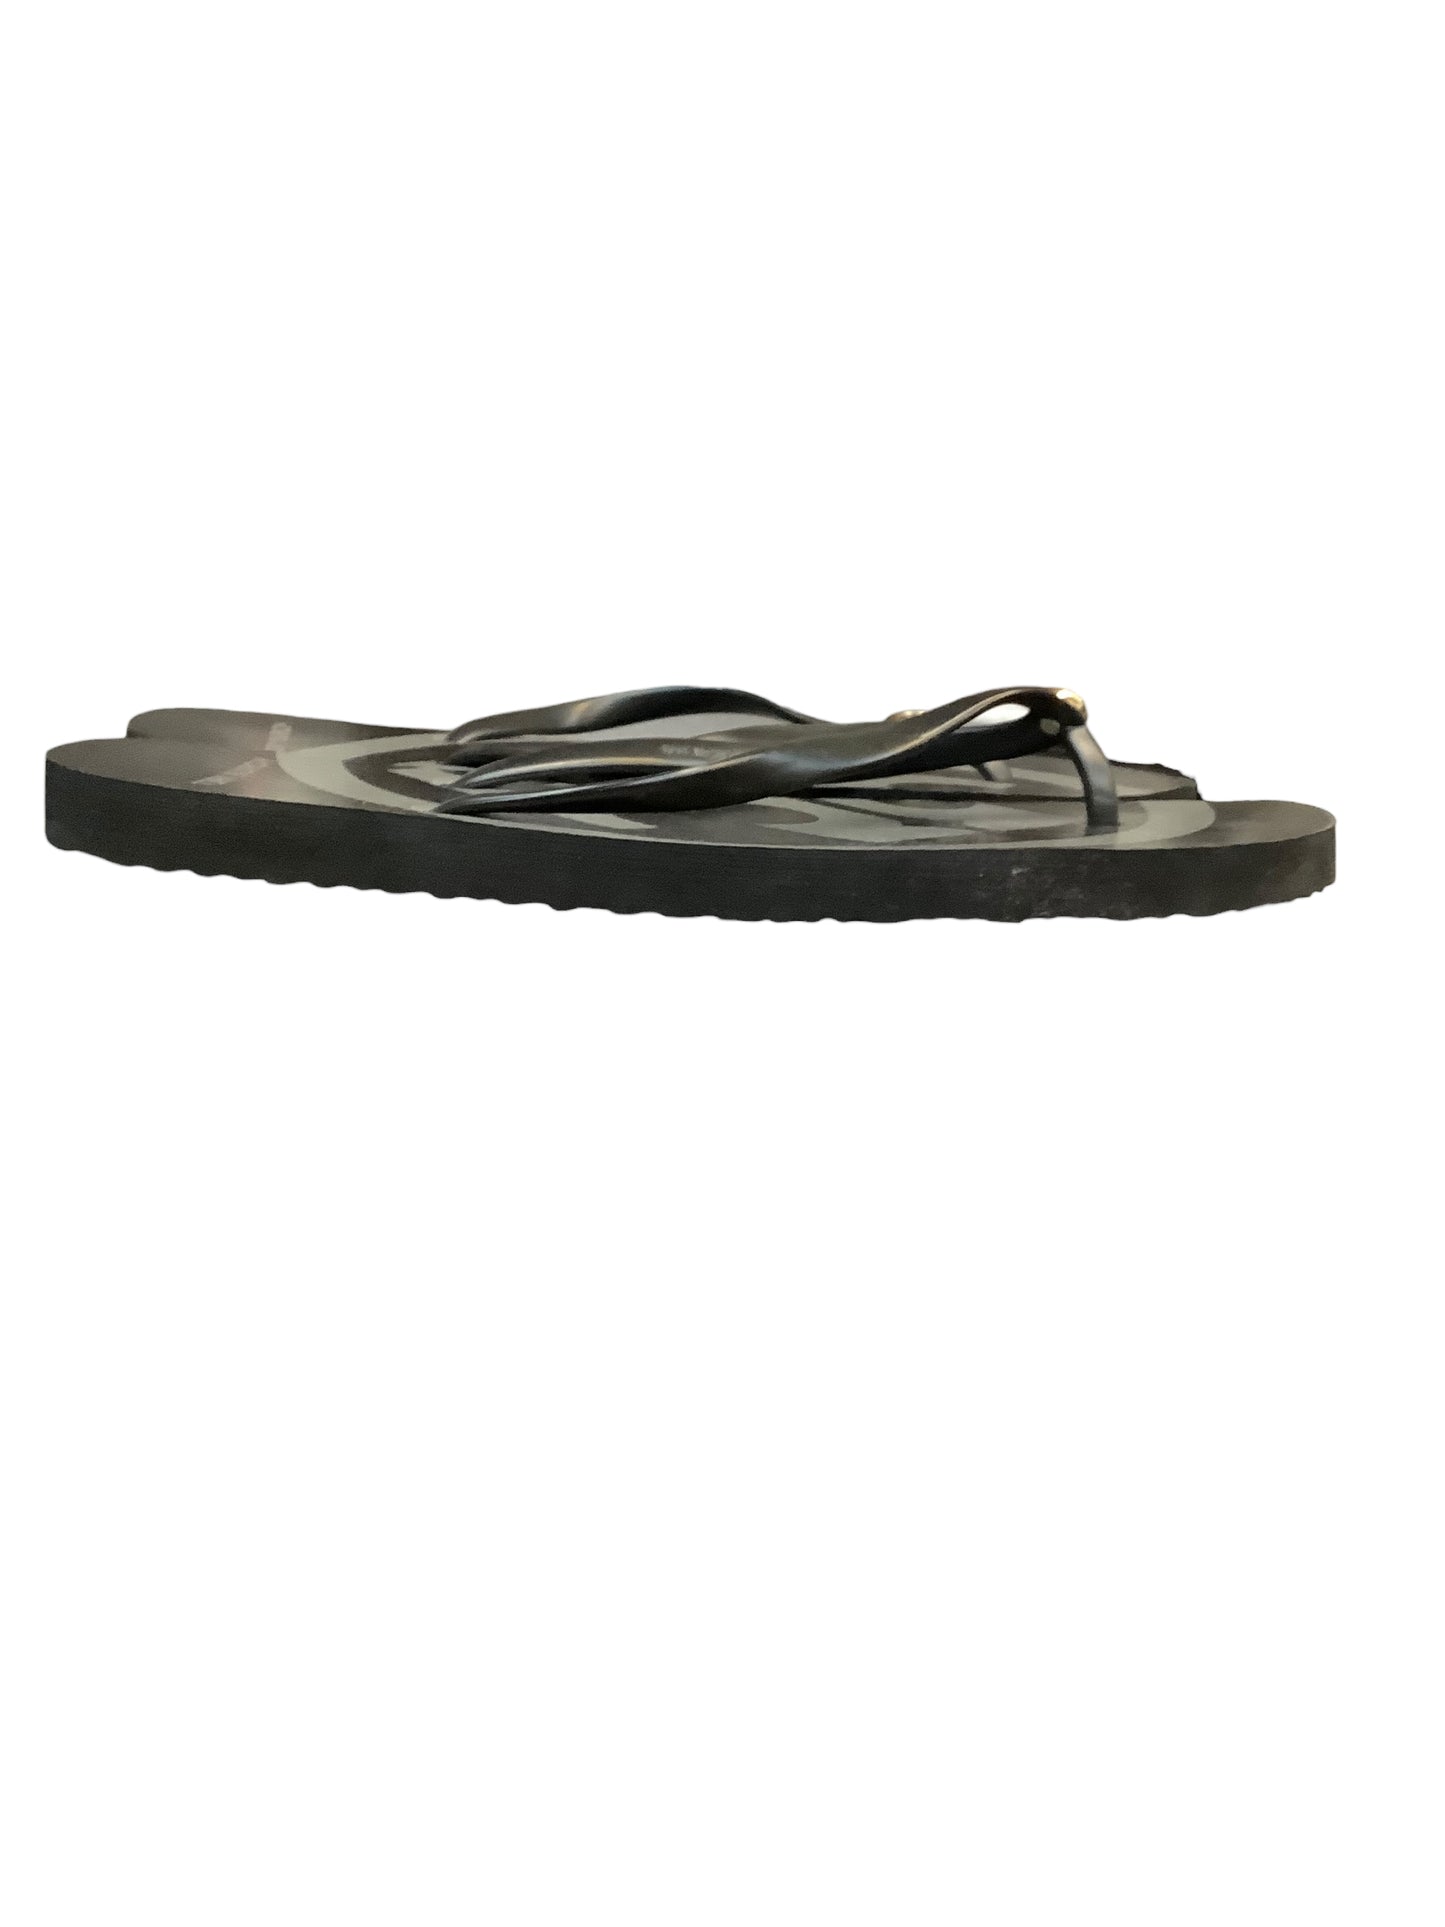 Sandals Flip Flops By Tory Burch  Size: 10